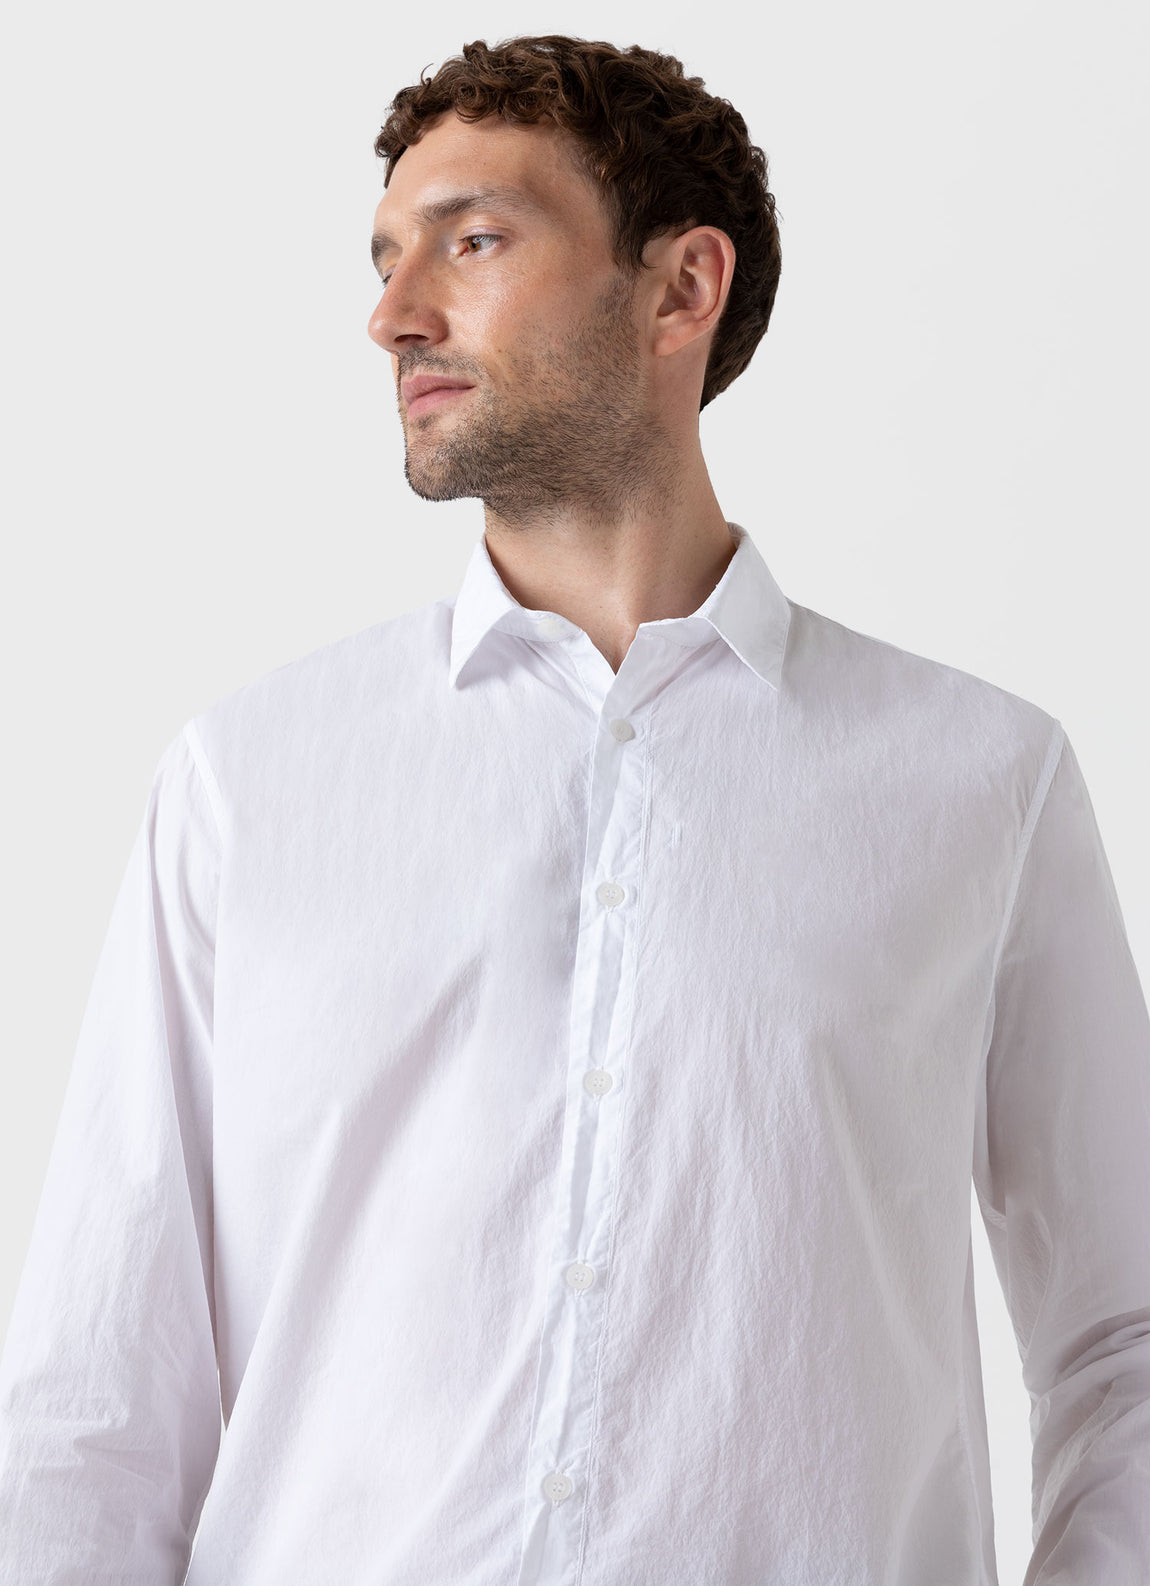 Men's Lightweight Poplin Shirt in White | Sunspel